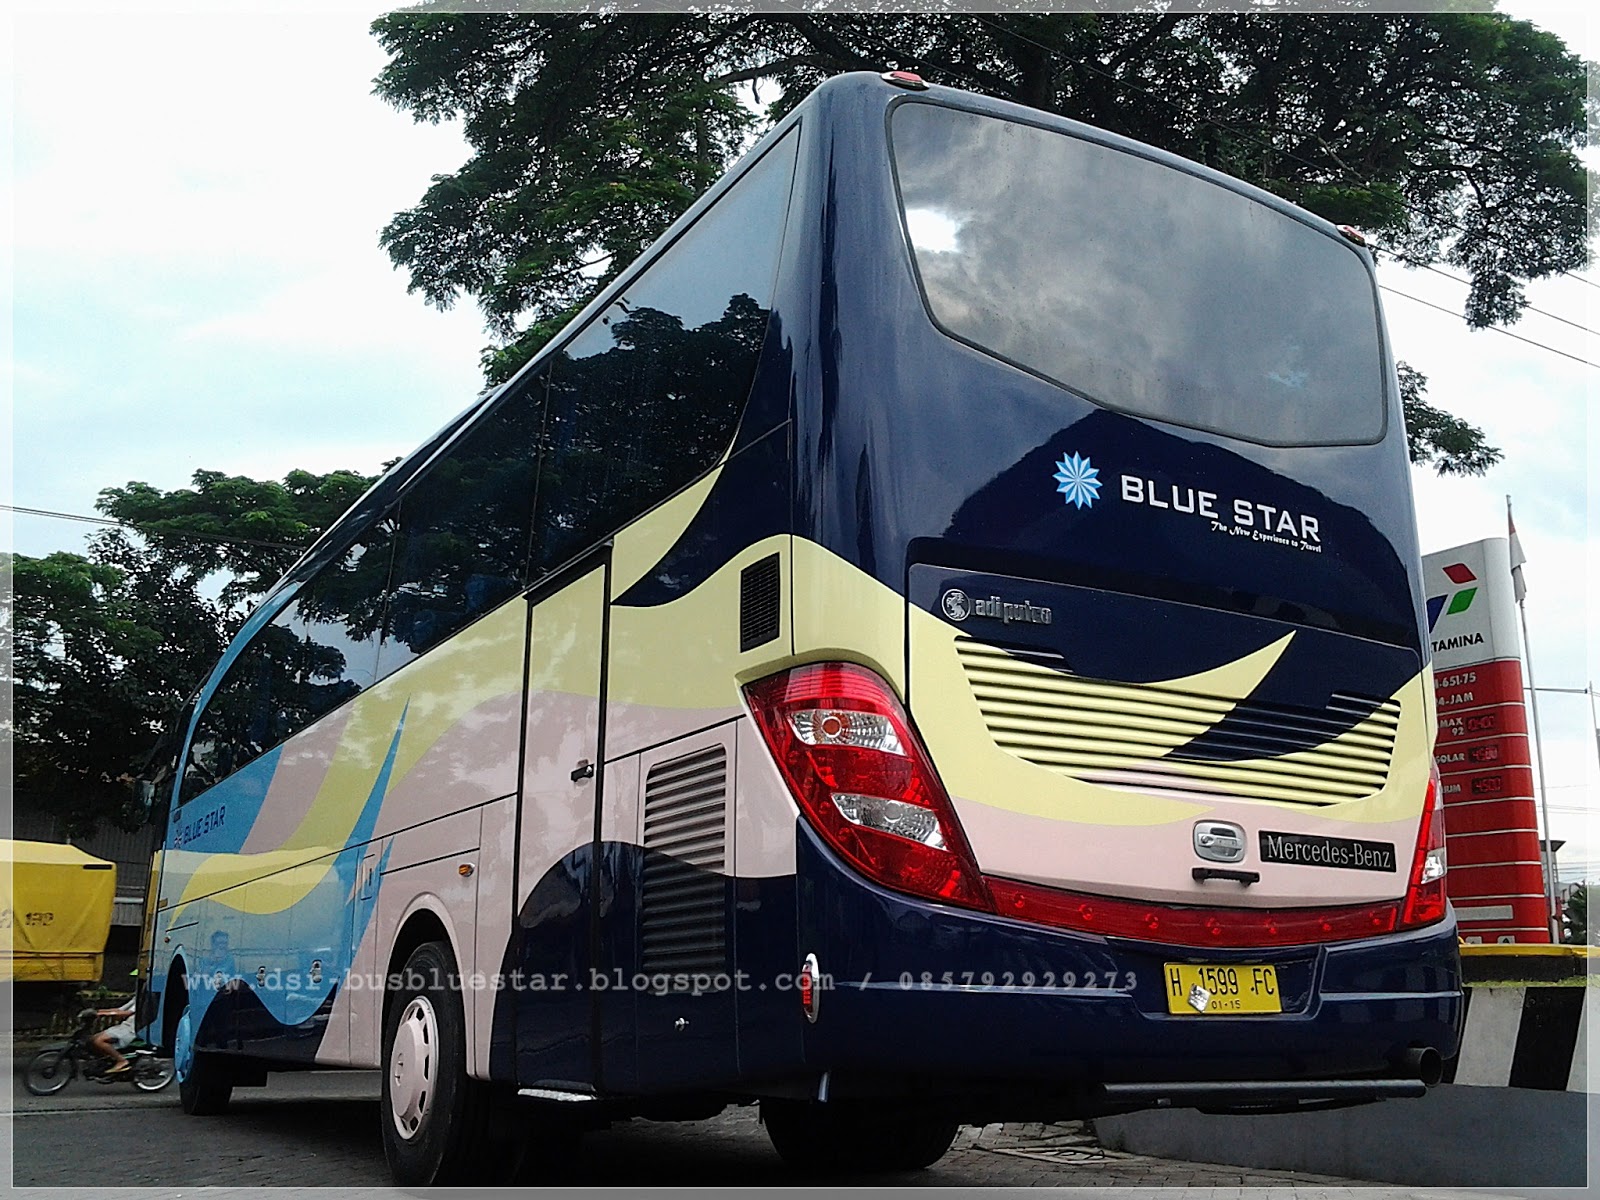 Direct Sales Representative Bus Pariwisata Blue Star BUS BLUE STAR